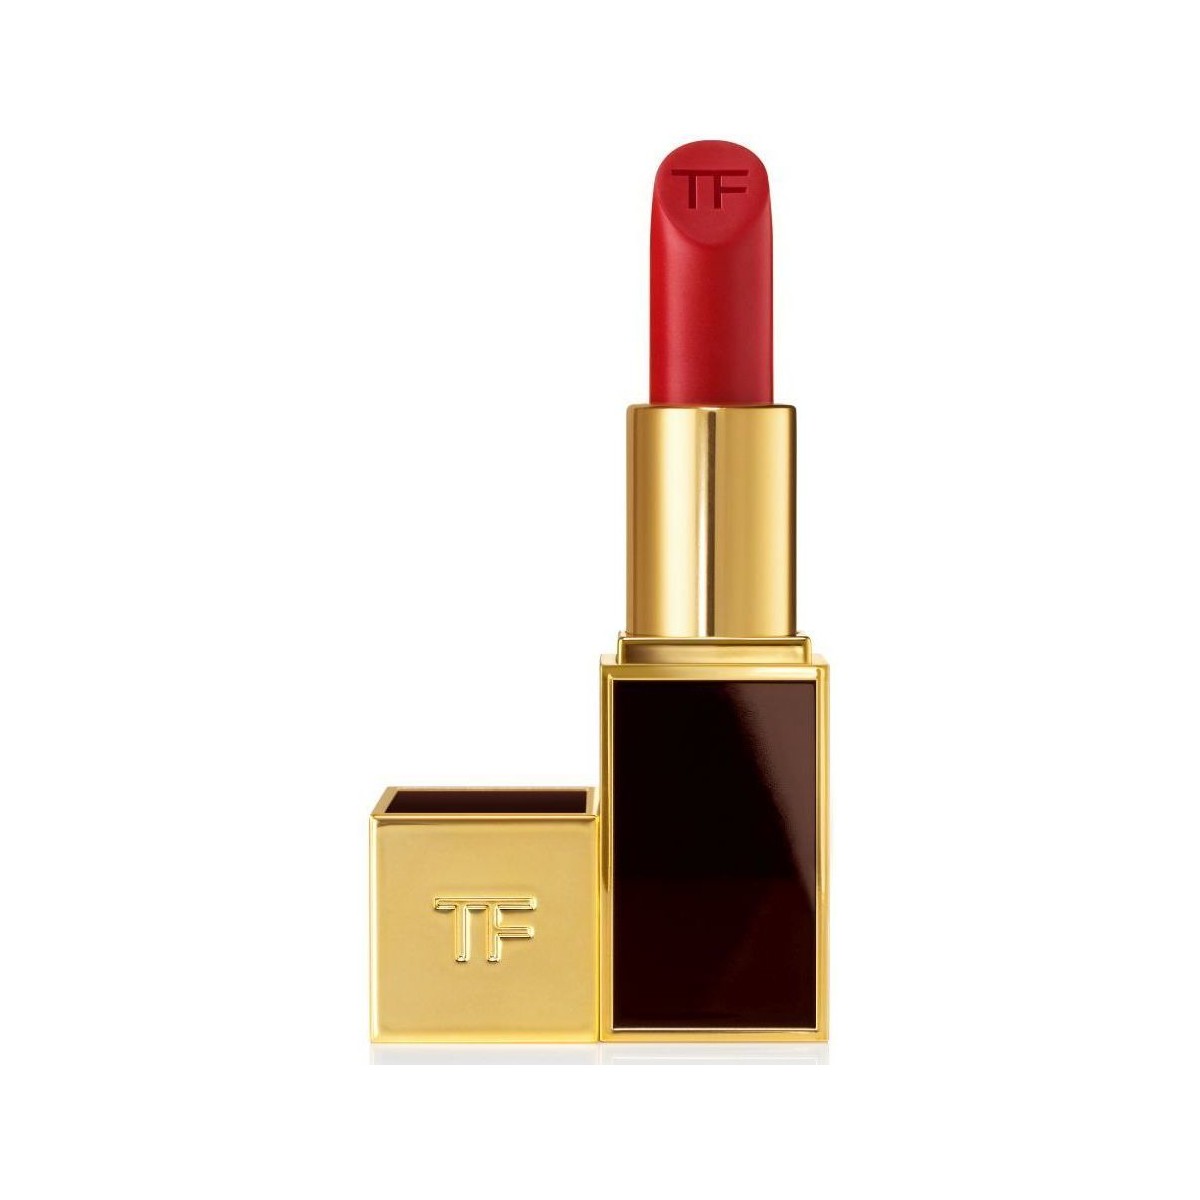 Belleza Mujer Perfume Tom Ford Lip Colour Rouge A Levres 3gr. - 62 Satin Chic Lip Colour Rouge A Levres 3gr. - 62 Satin Chic